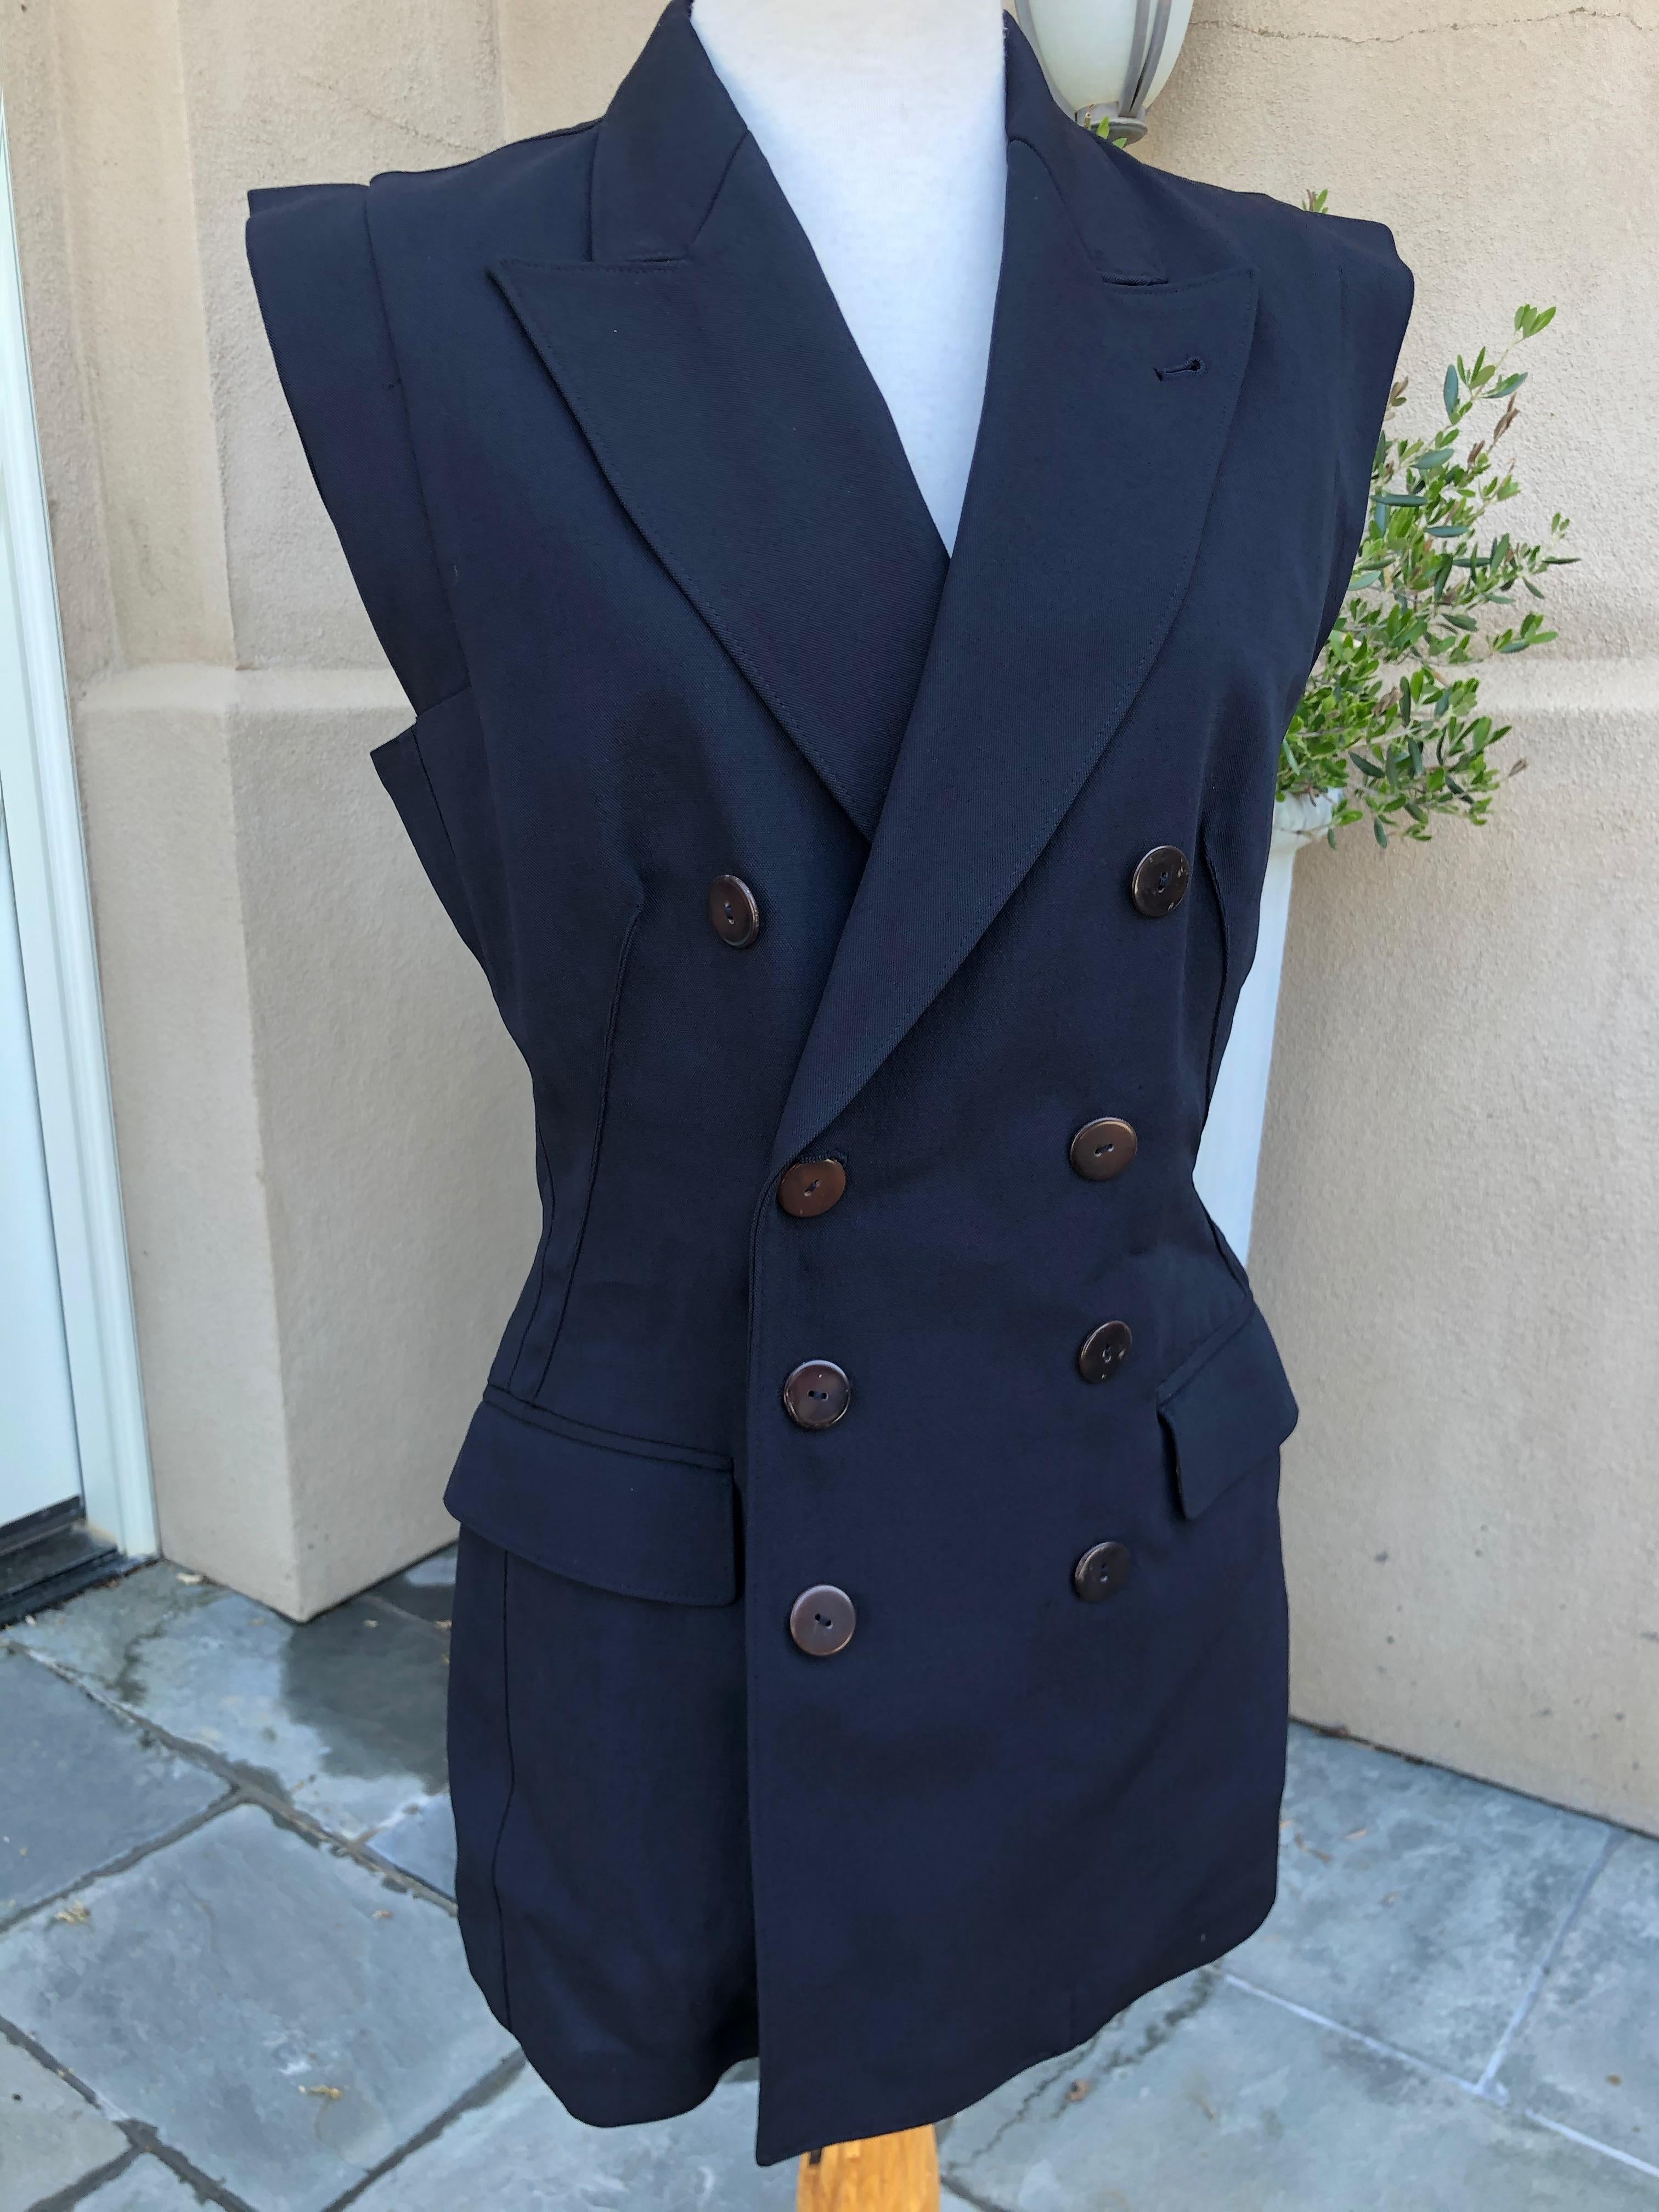 Jean Paul Gaultier 1980's Sleeveless Tuxedo Jacket .
Unisex, it would fit a small man.
Size 36 Fr
Bust 36